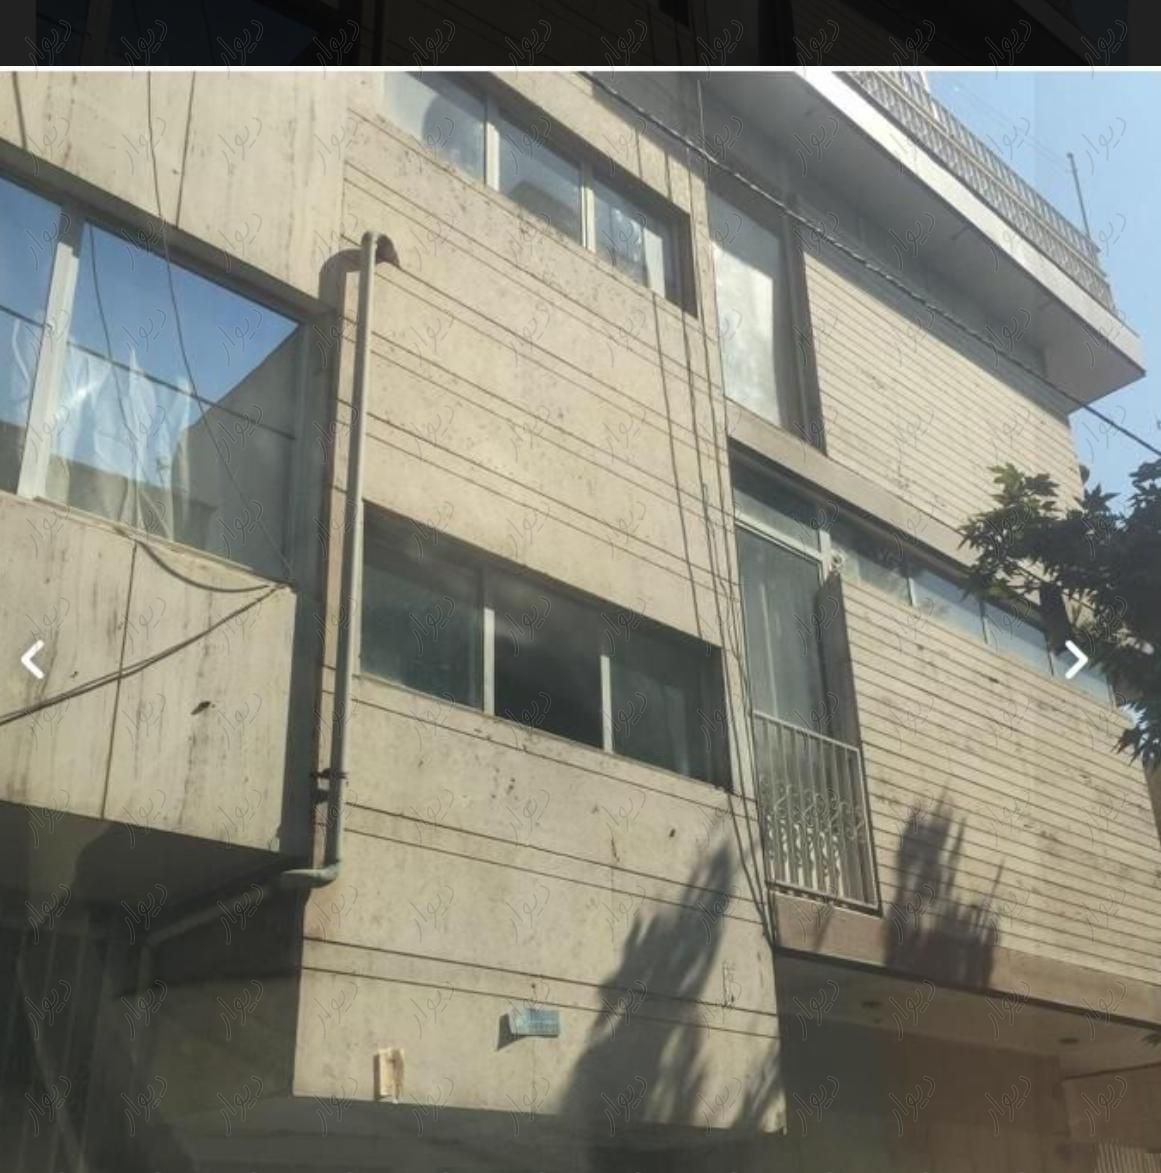 اپارتمان|فروش آپارتمان|تهران, نارمک|دیوار